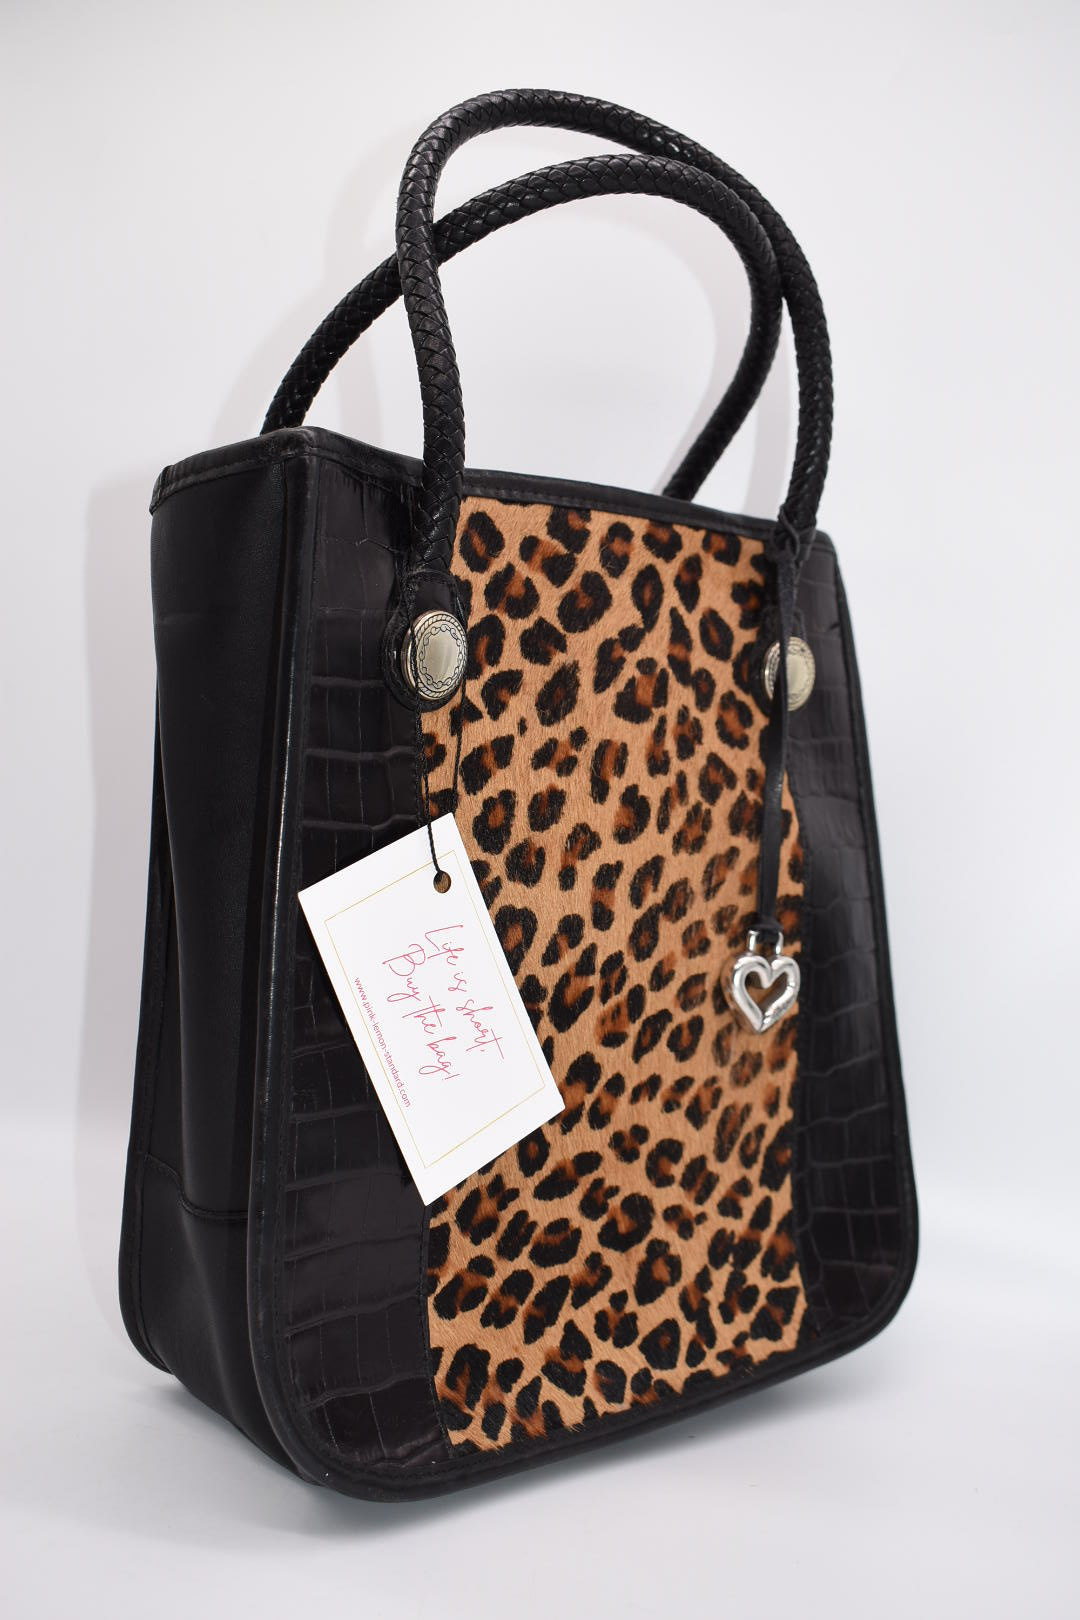 Vintage Brighton Leather & Cheetah Tote Bag